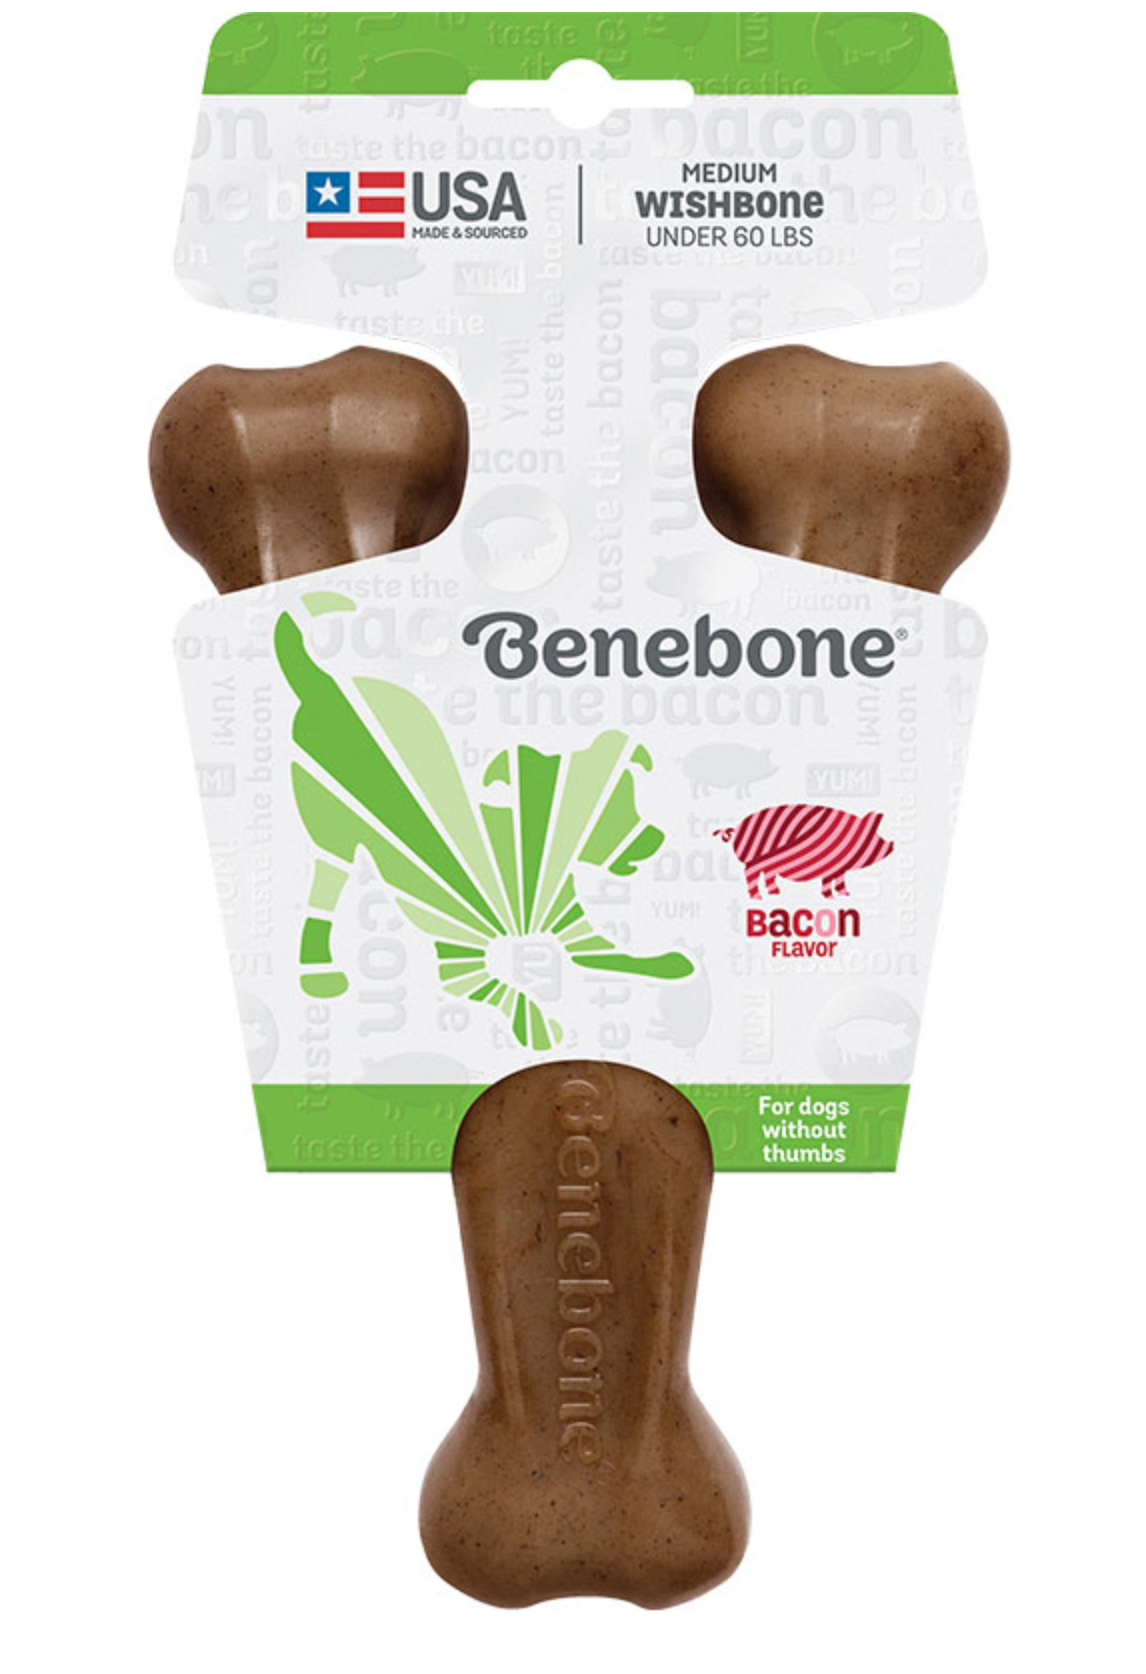 Benebone Wishbone Tough Dog Chew Toy - Bacon Flavor/Medium